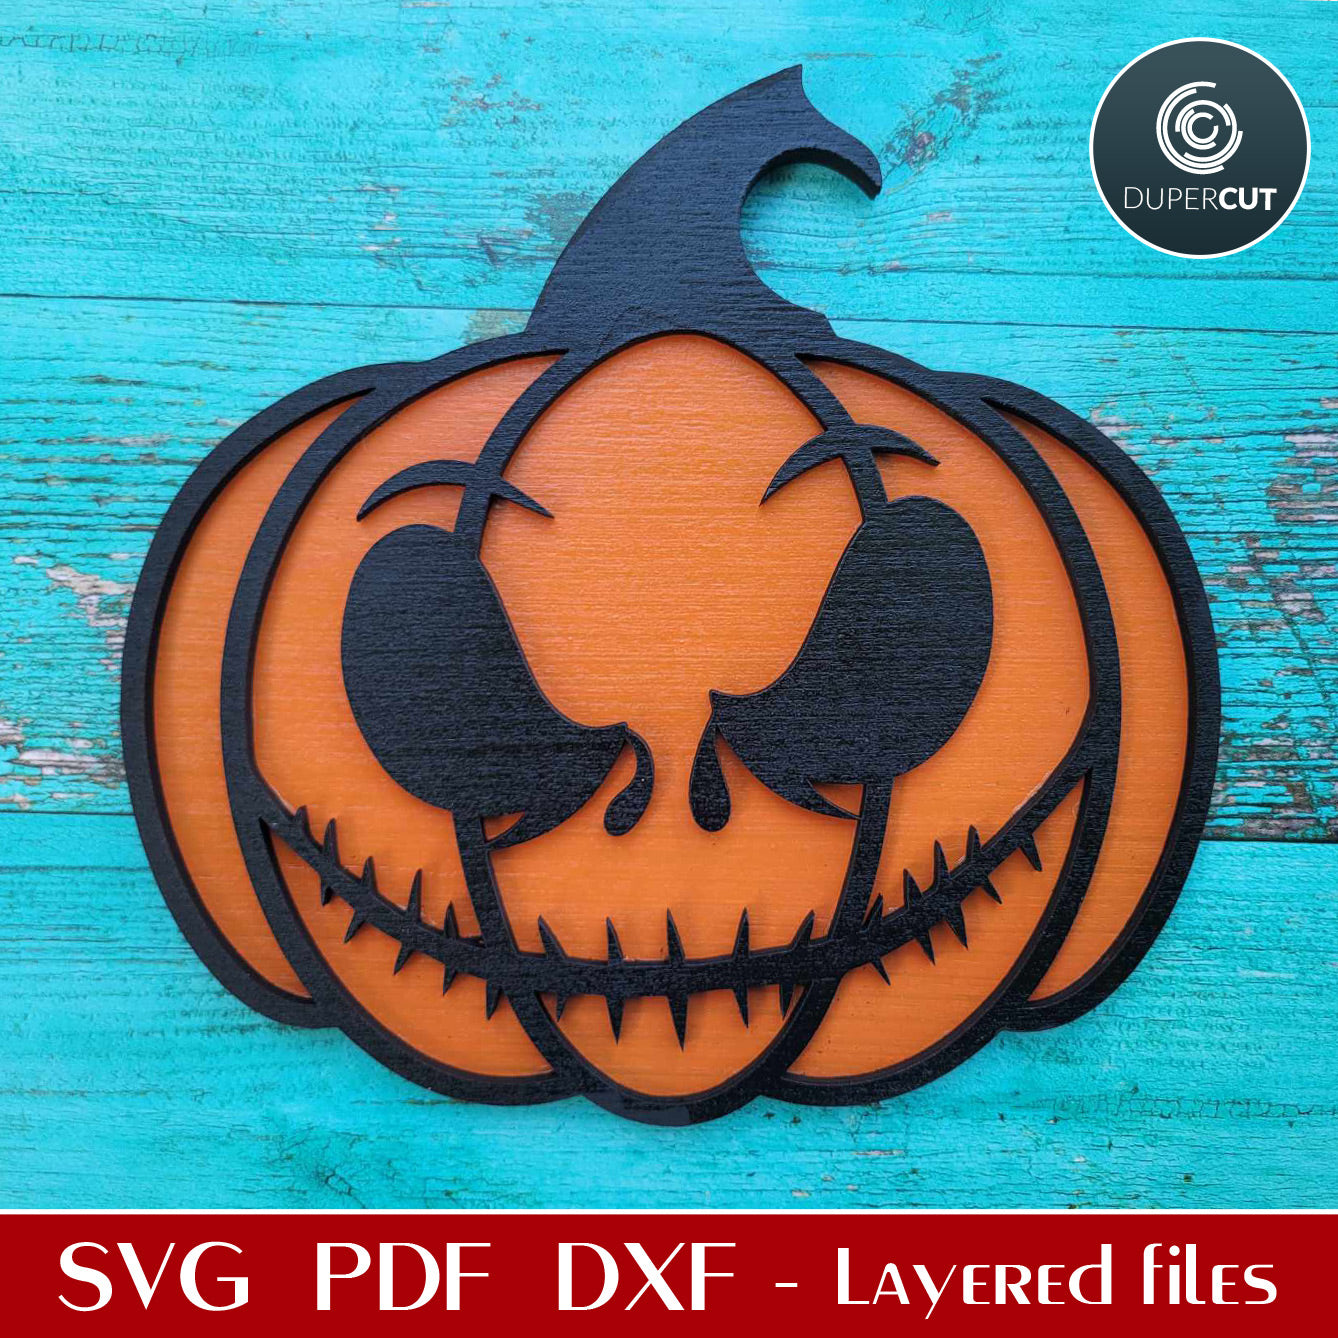 Jack Skellington shaped pumpkin Halloween decor - SVG DXF layered files for glowforge, Cricut, CNC plasma machines, scroll saw pattern by www.DuperCut.com